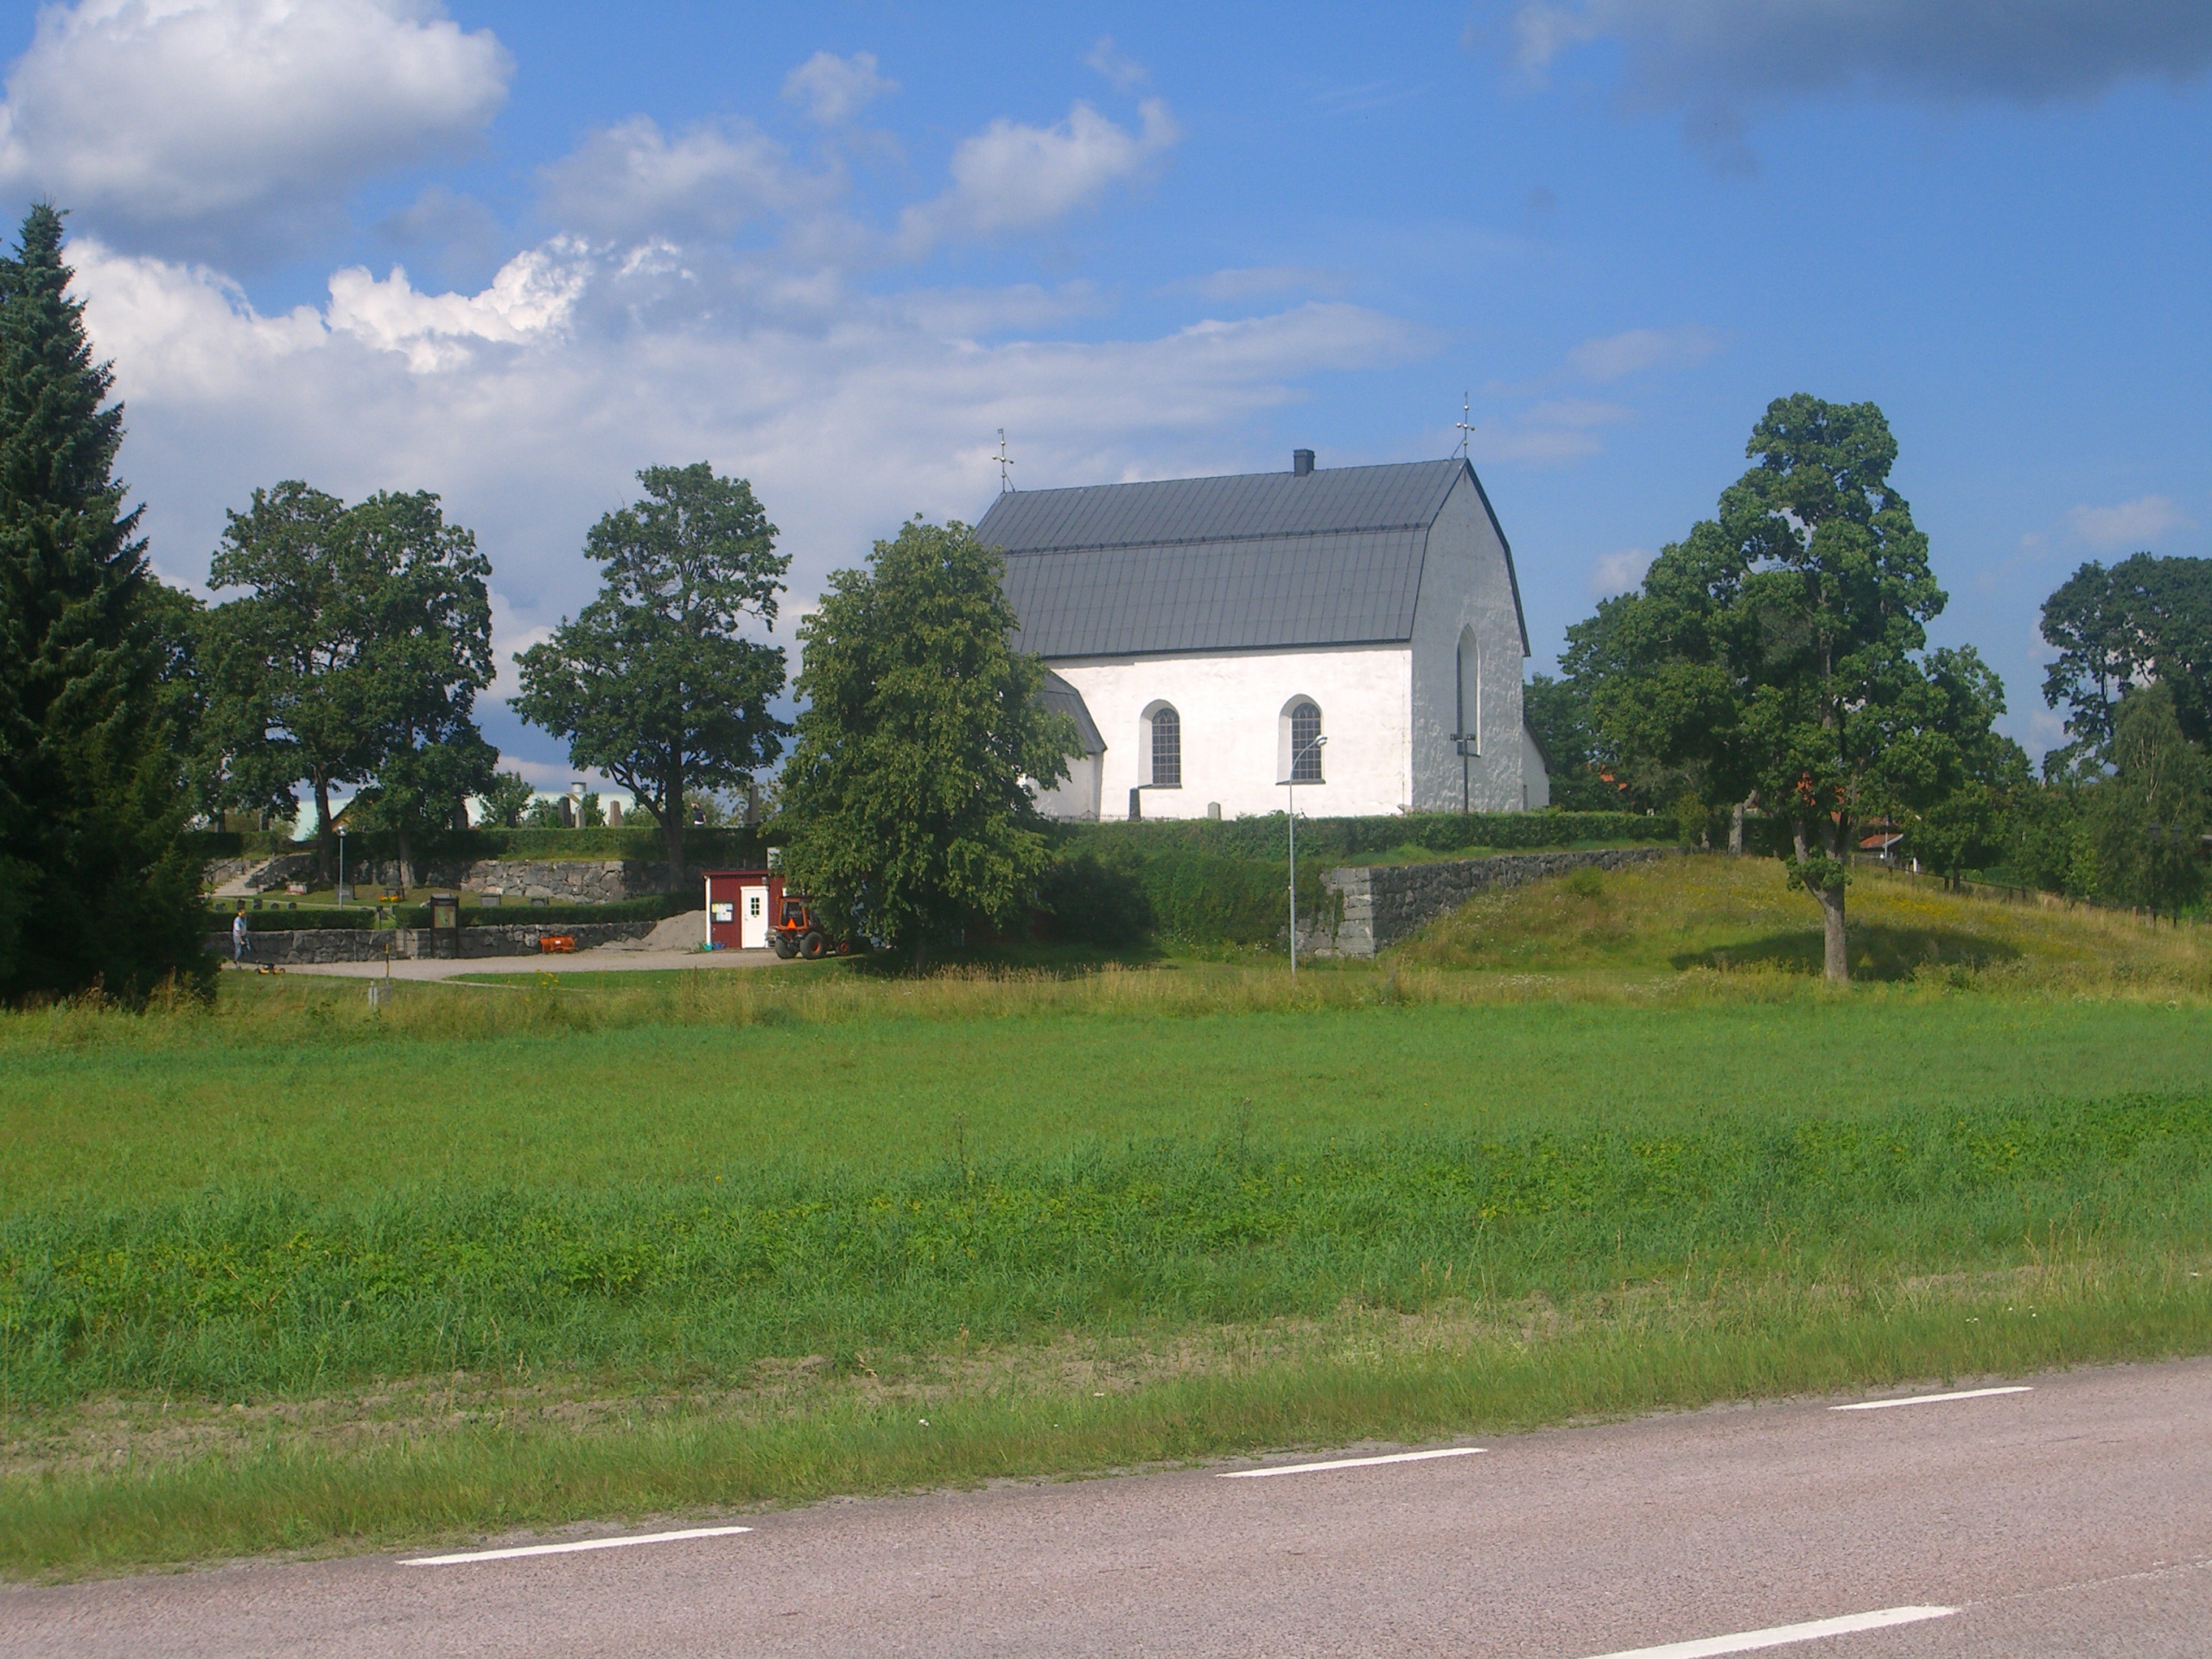 Fil:Sweden tolfta church angels with resurgepillsreview.com – Wikipedia